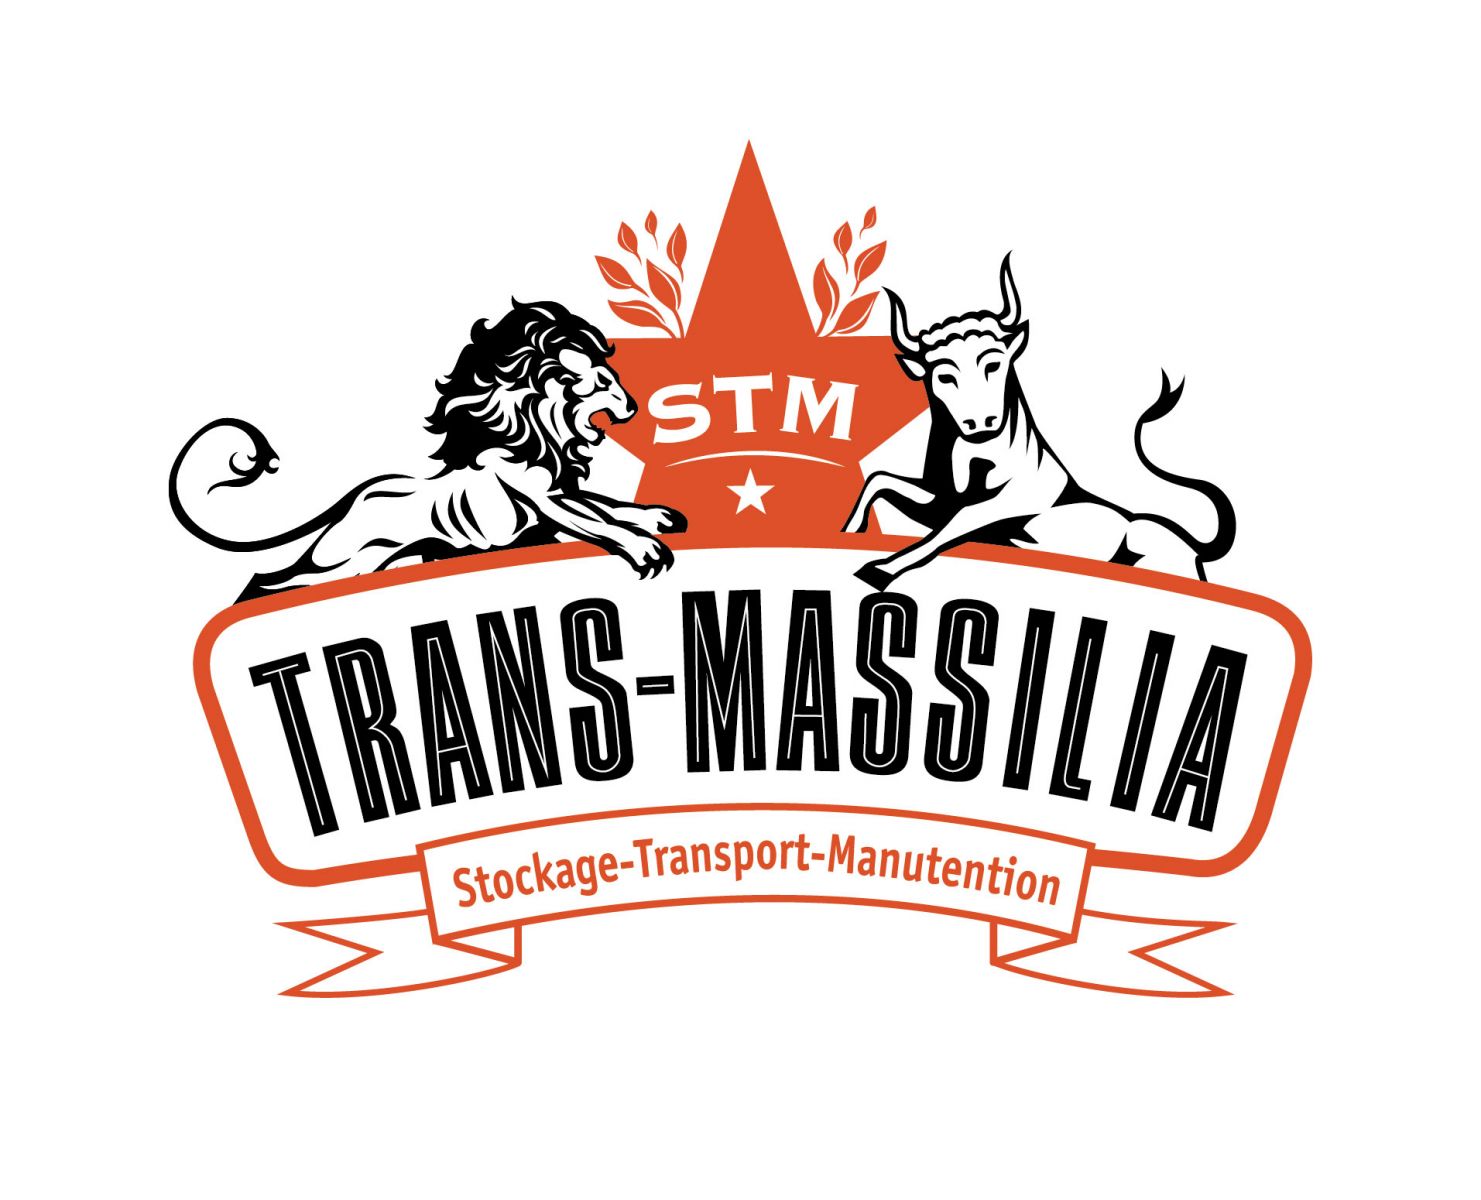 trans-massilia cress paca